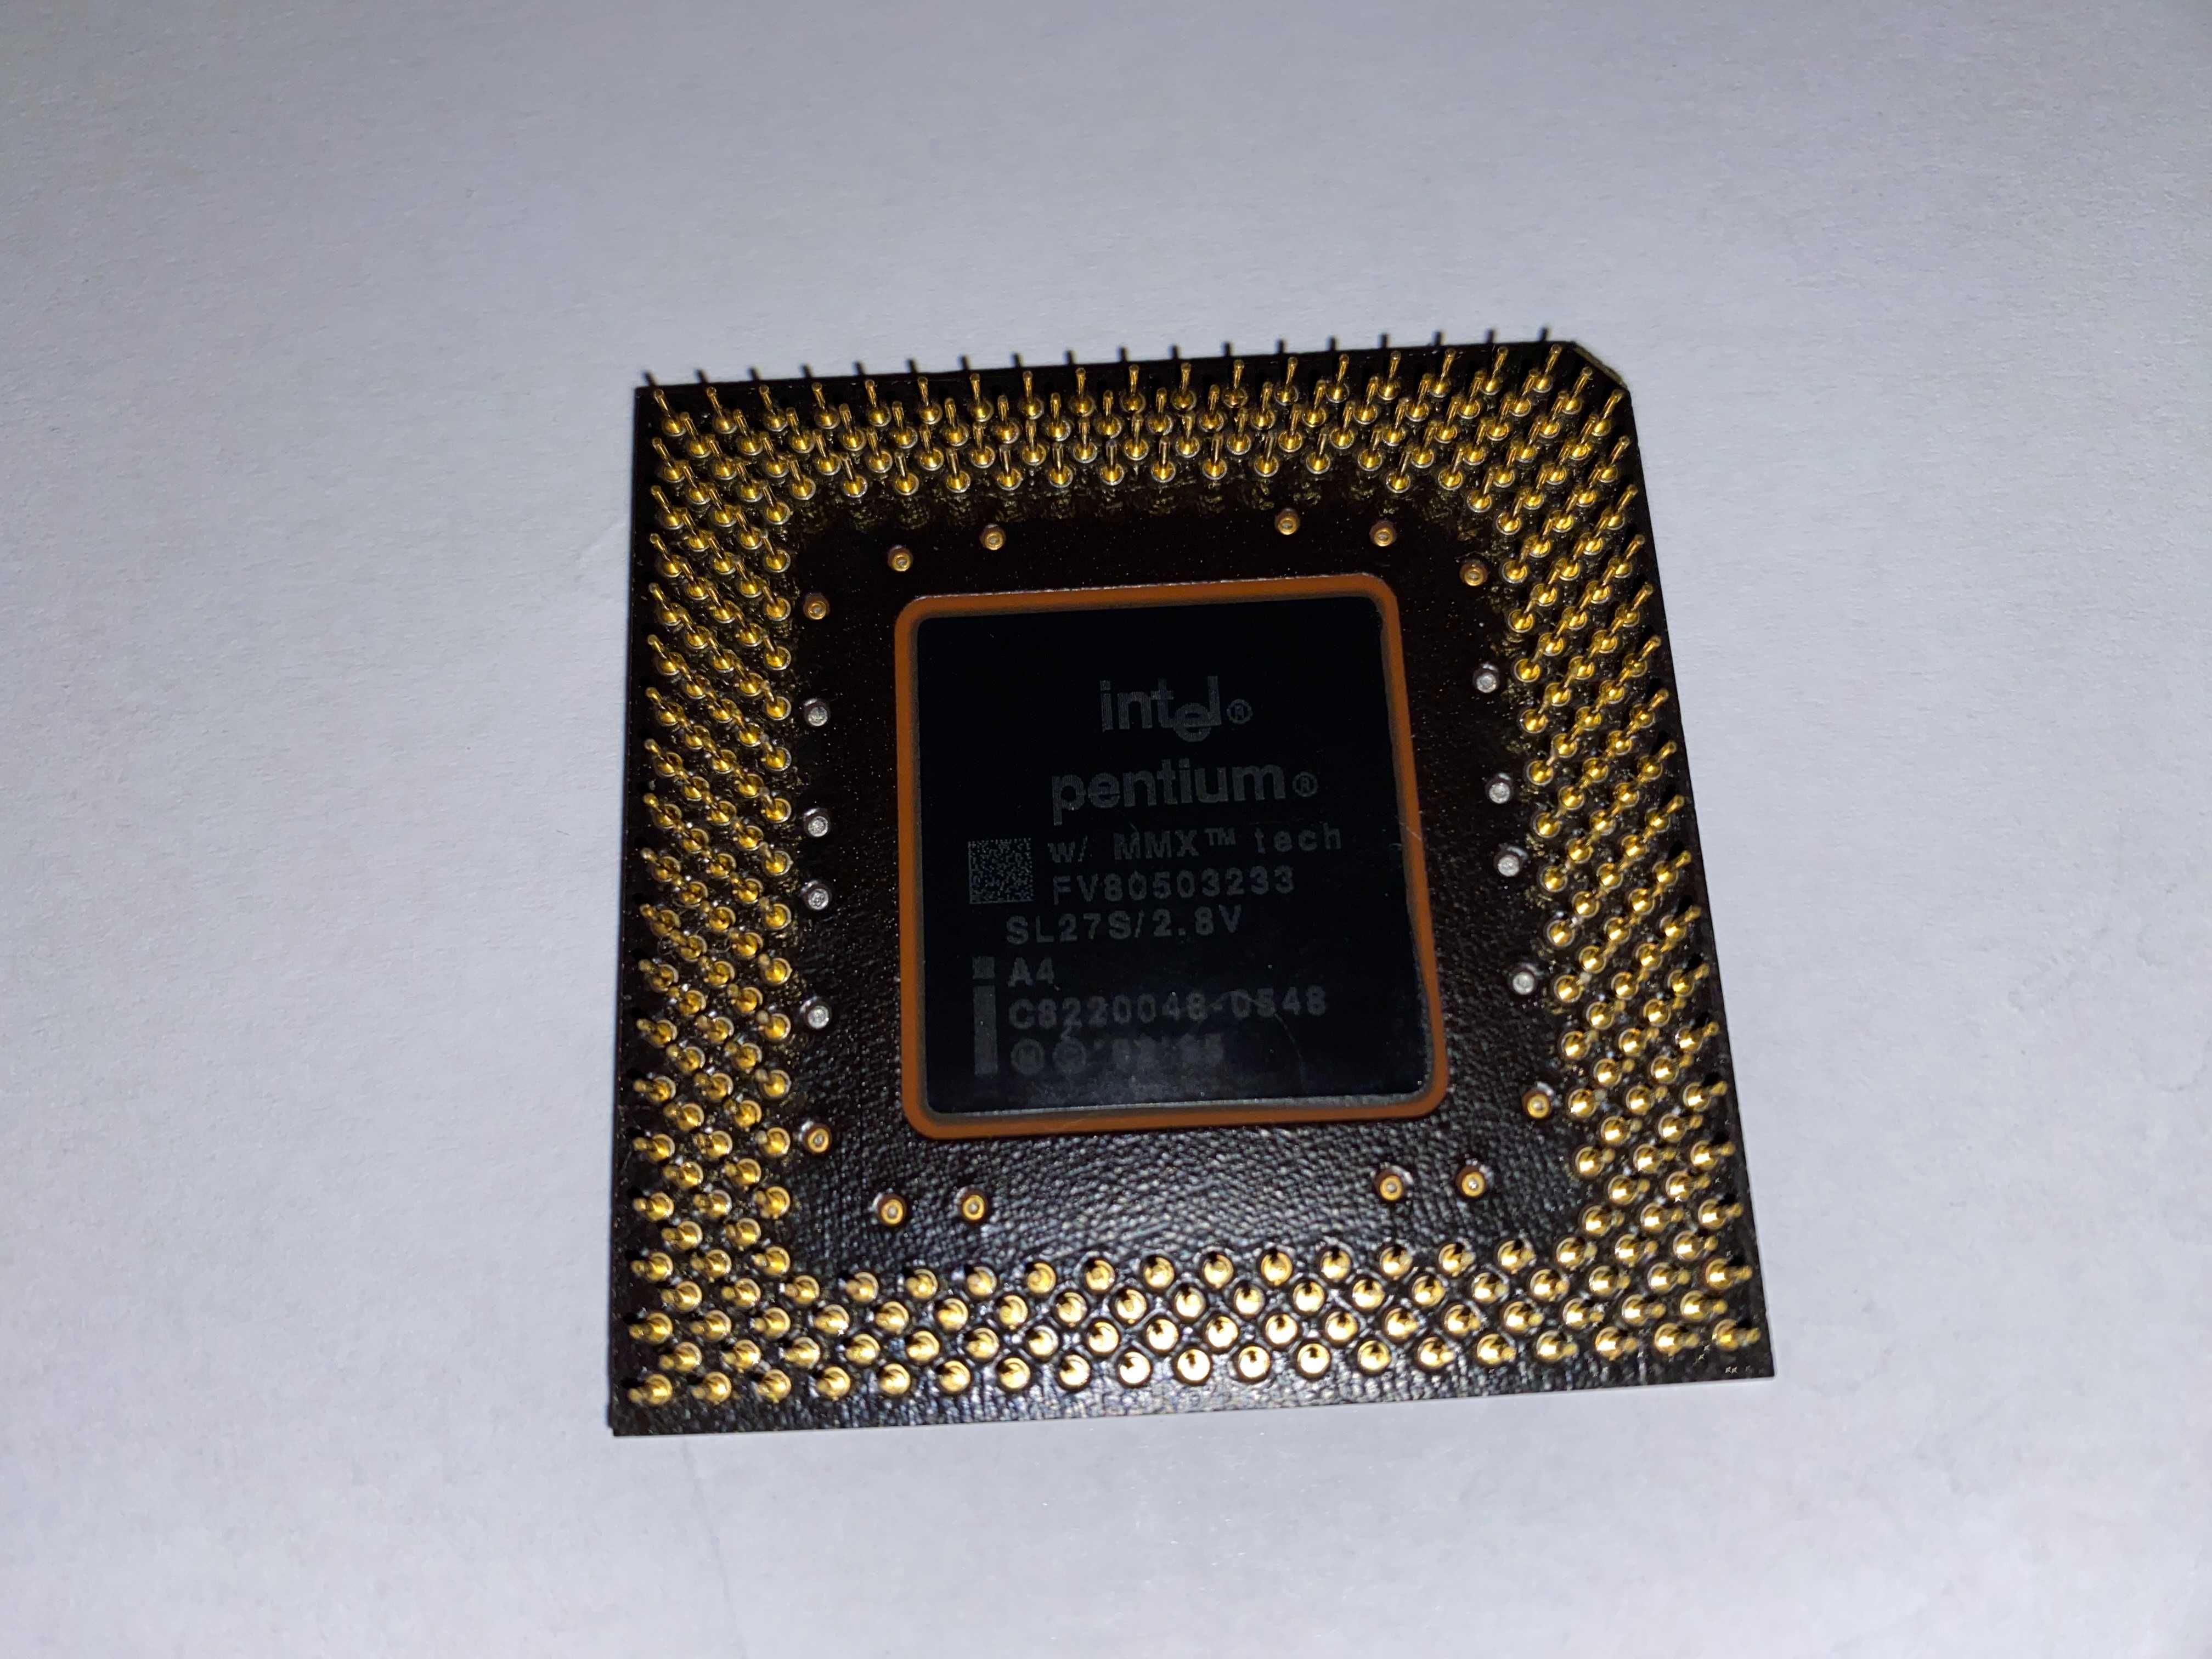 Intel Pentium 233 MMX socket 7